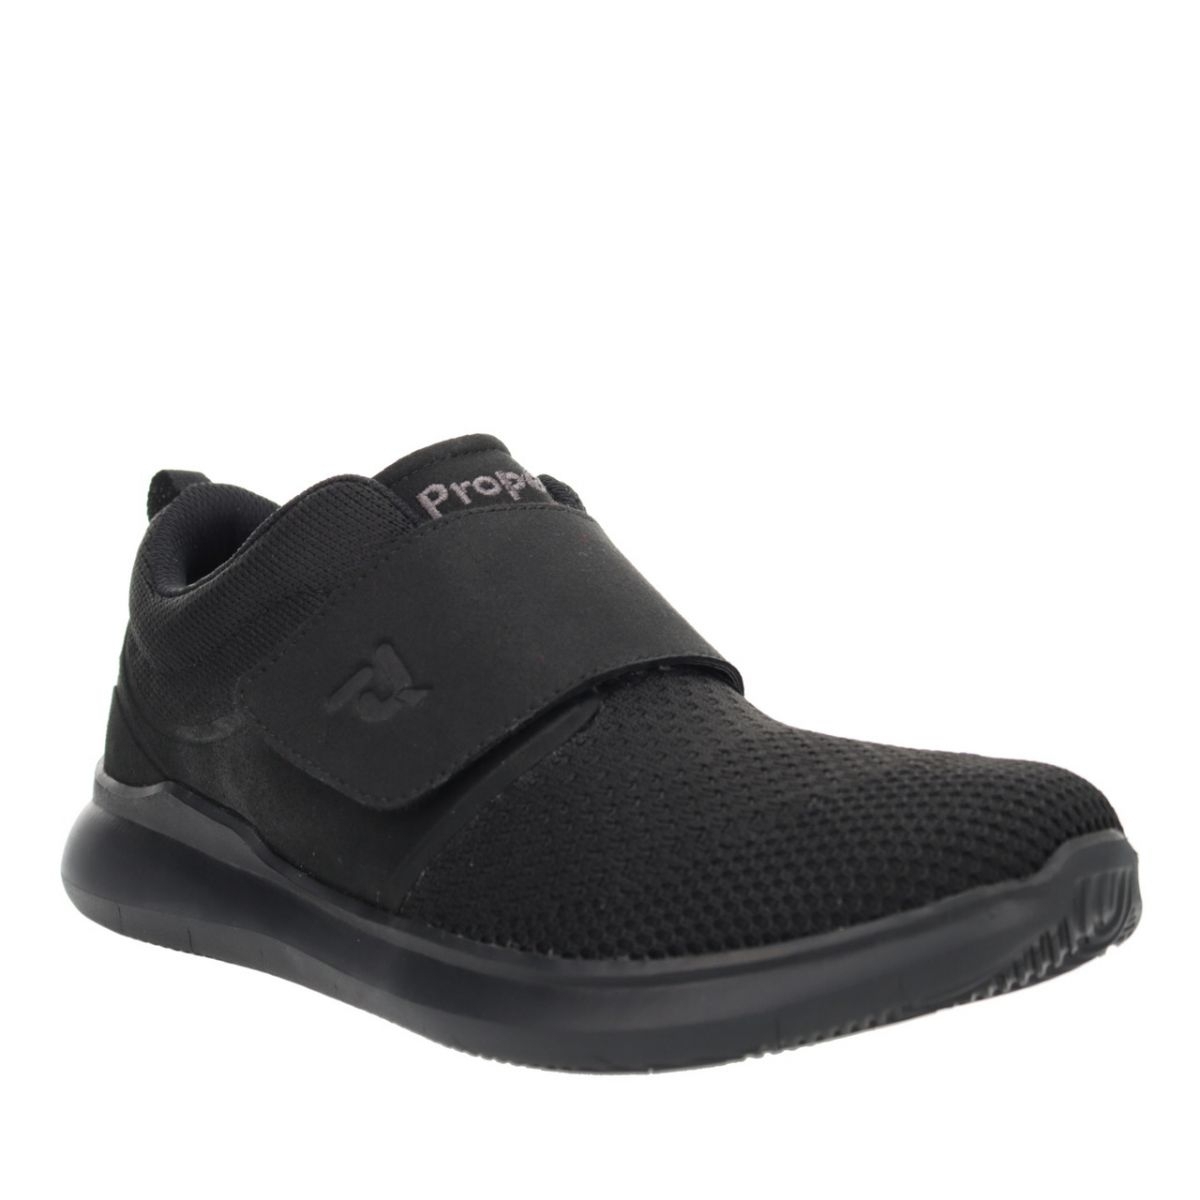 Propet Men's Viator Strap Walking Shoe All Black - MAA073MABL ALL BLACK - ALL BLACK, 9.5 X-Wide